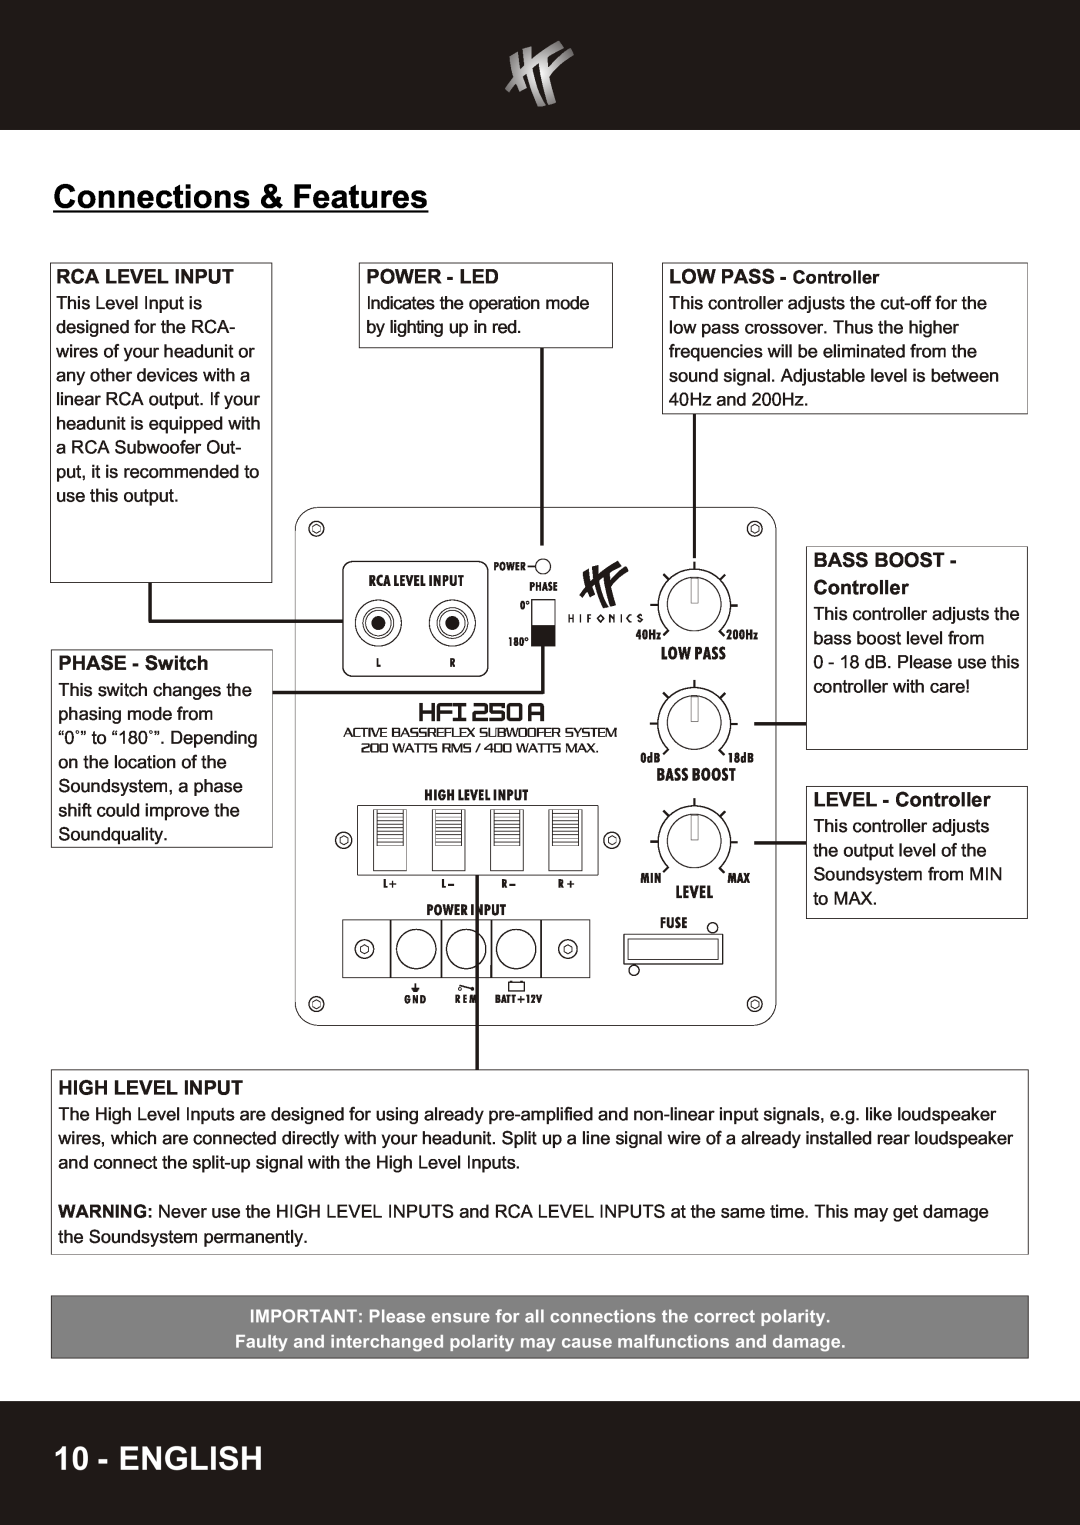 Hifionics HFI 200 A-HFI250A manual Connections & Features, English, Rca Level Input, Power - Led, LOW PASS - Controller 